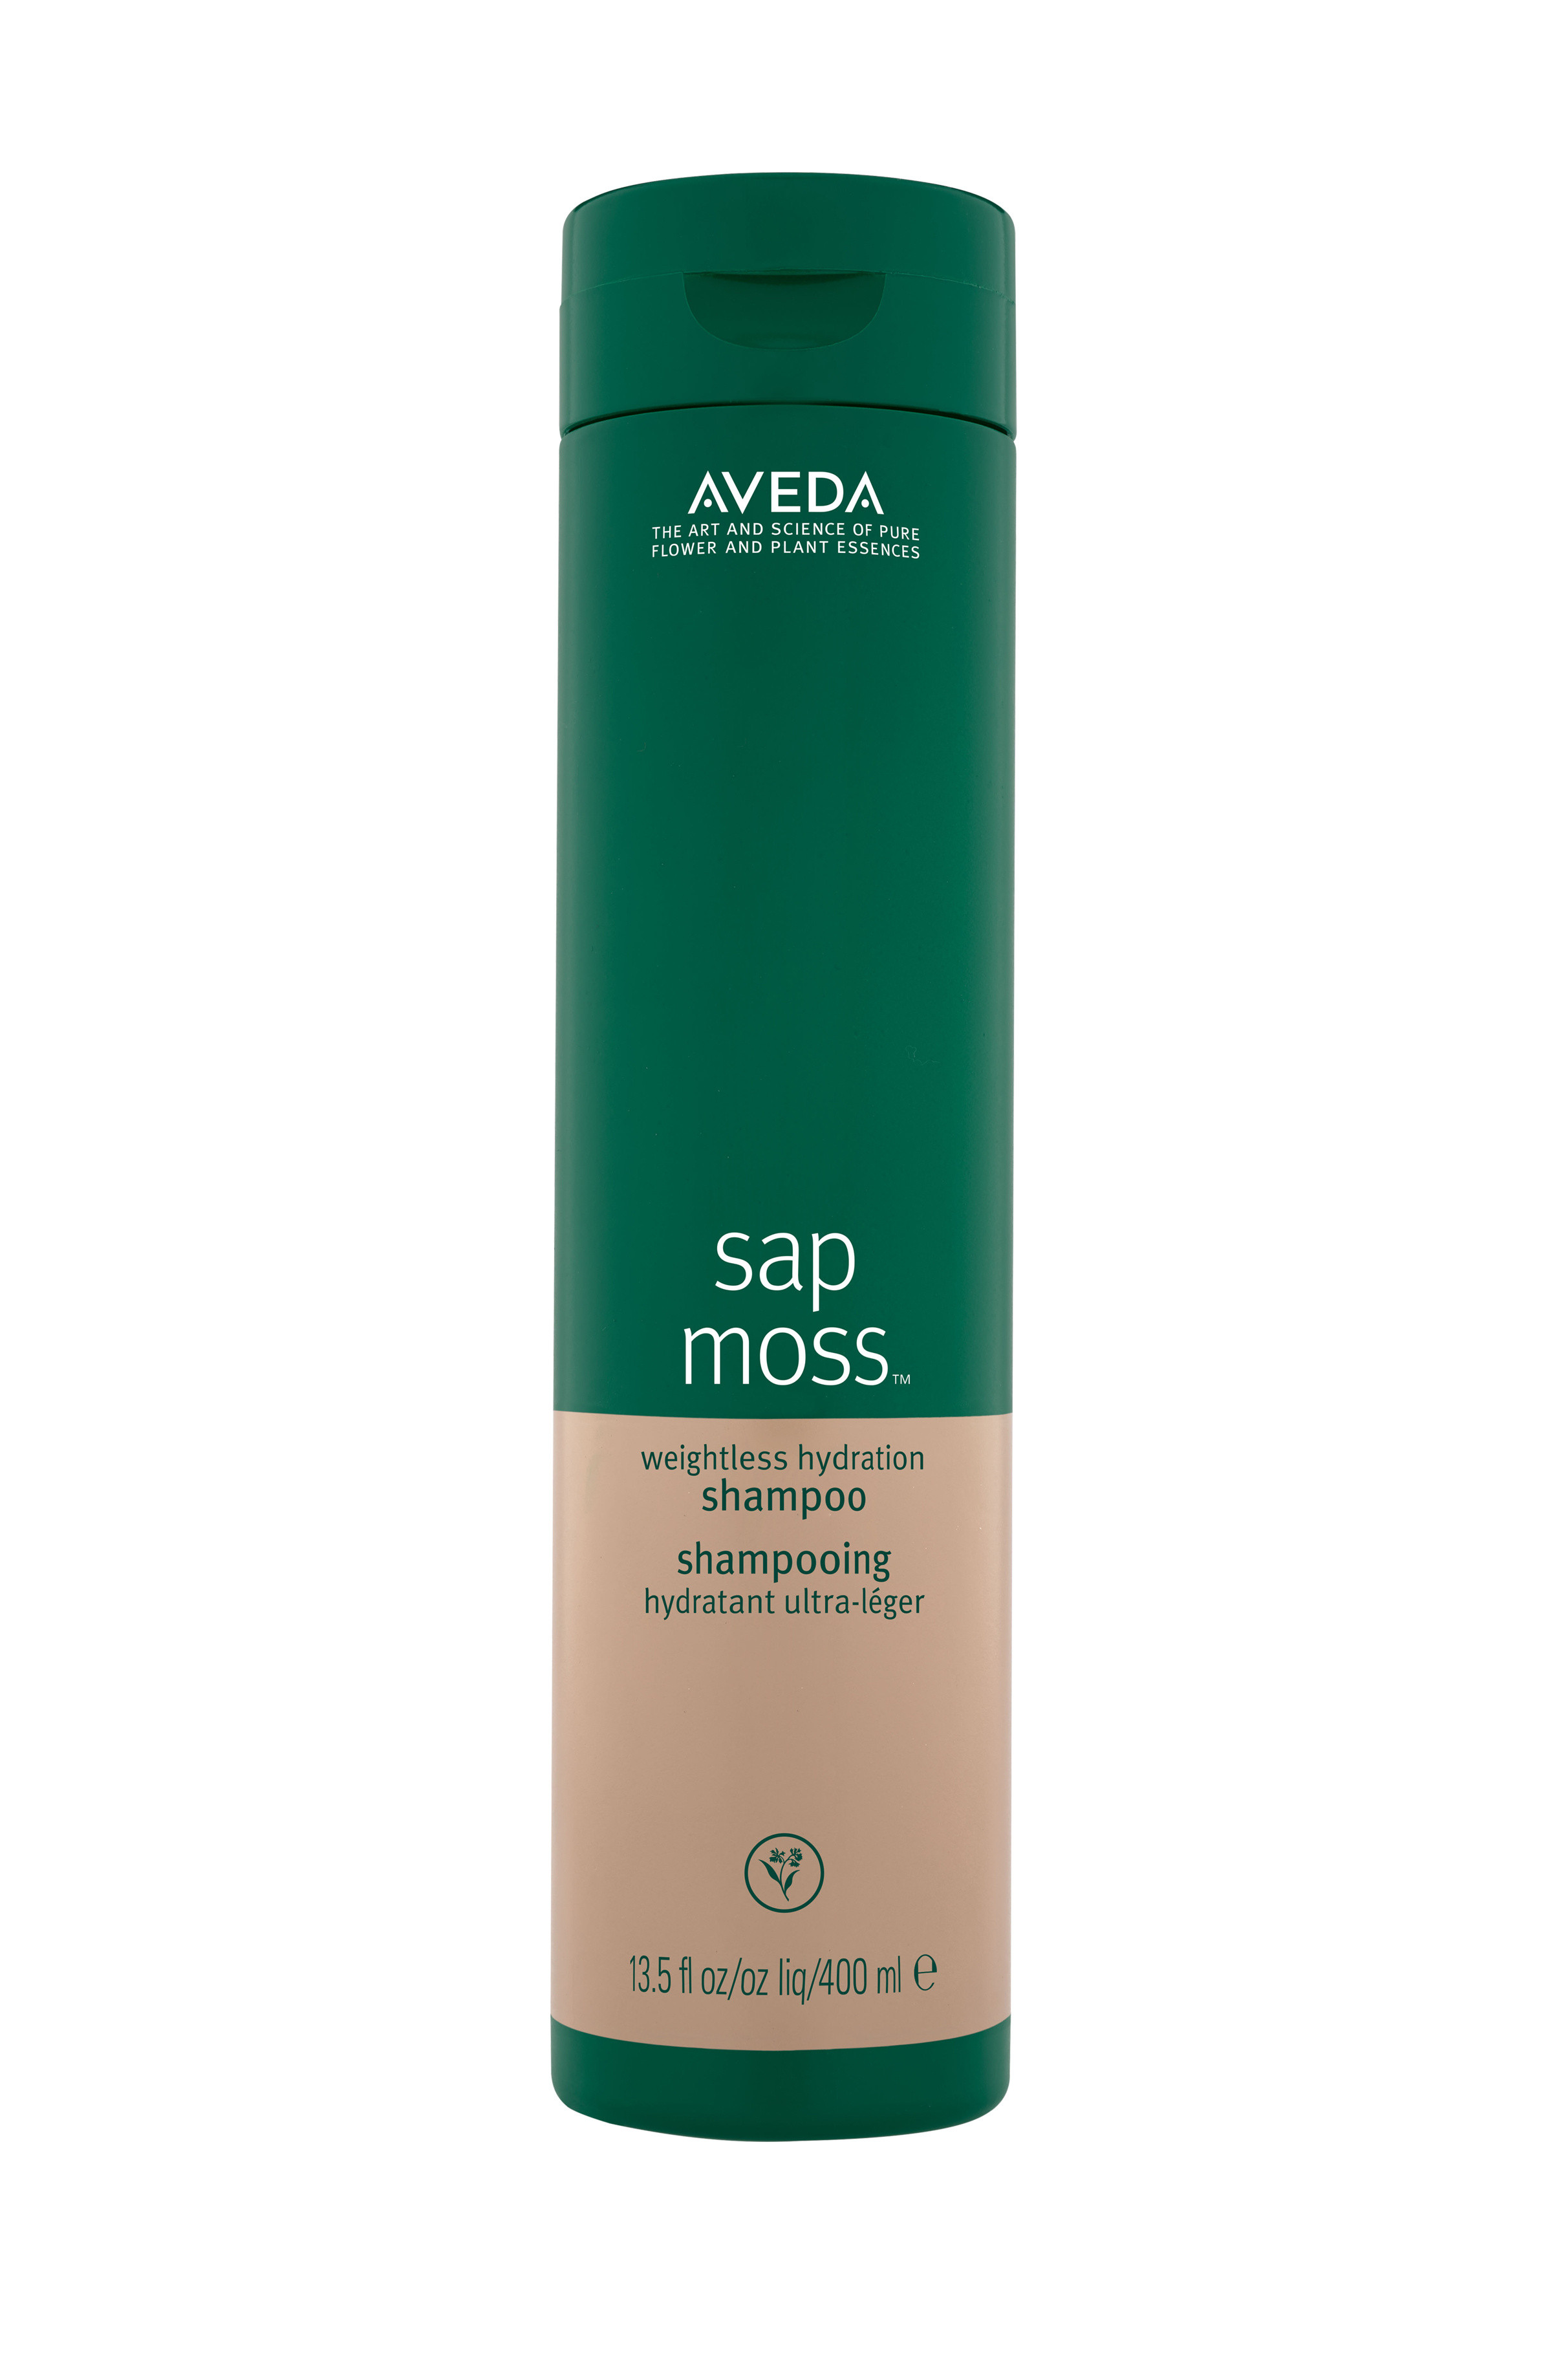 Aveda sap moss weightless hydration shampoo 400 ml, Green, large image number 0